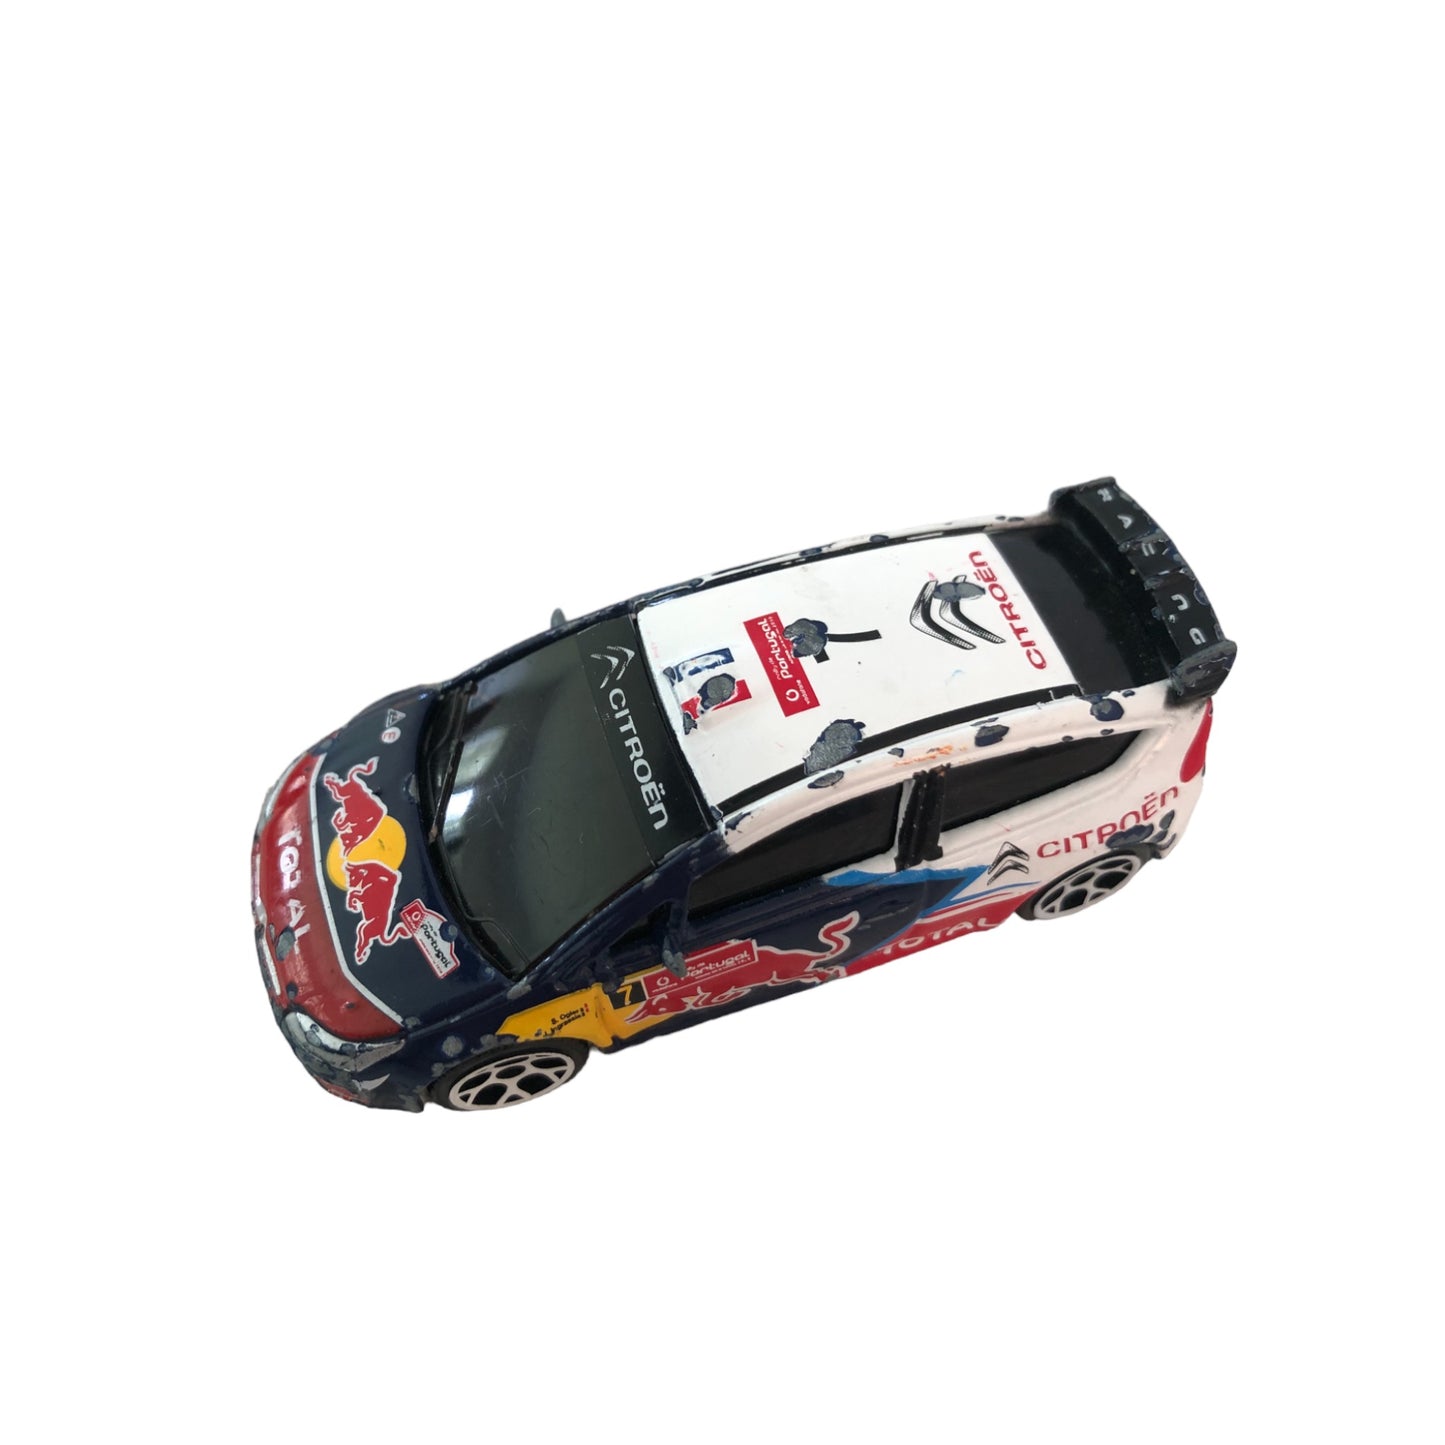 Majorette - Set of 3 WRC racing cars